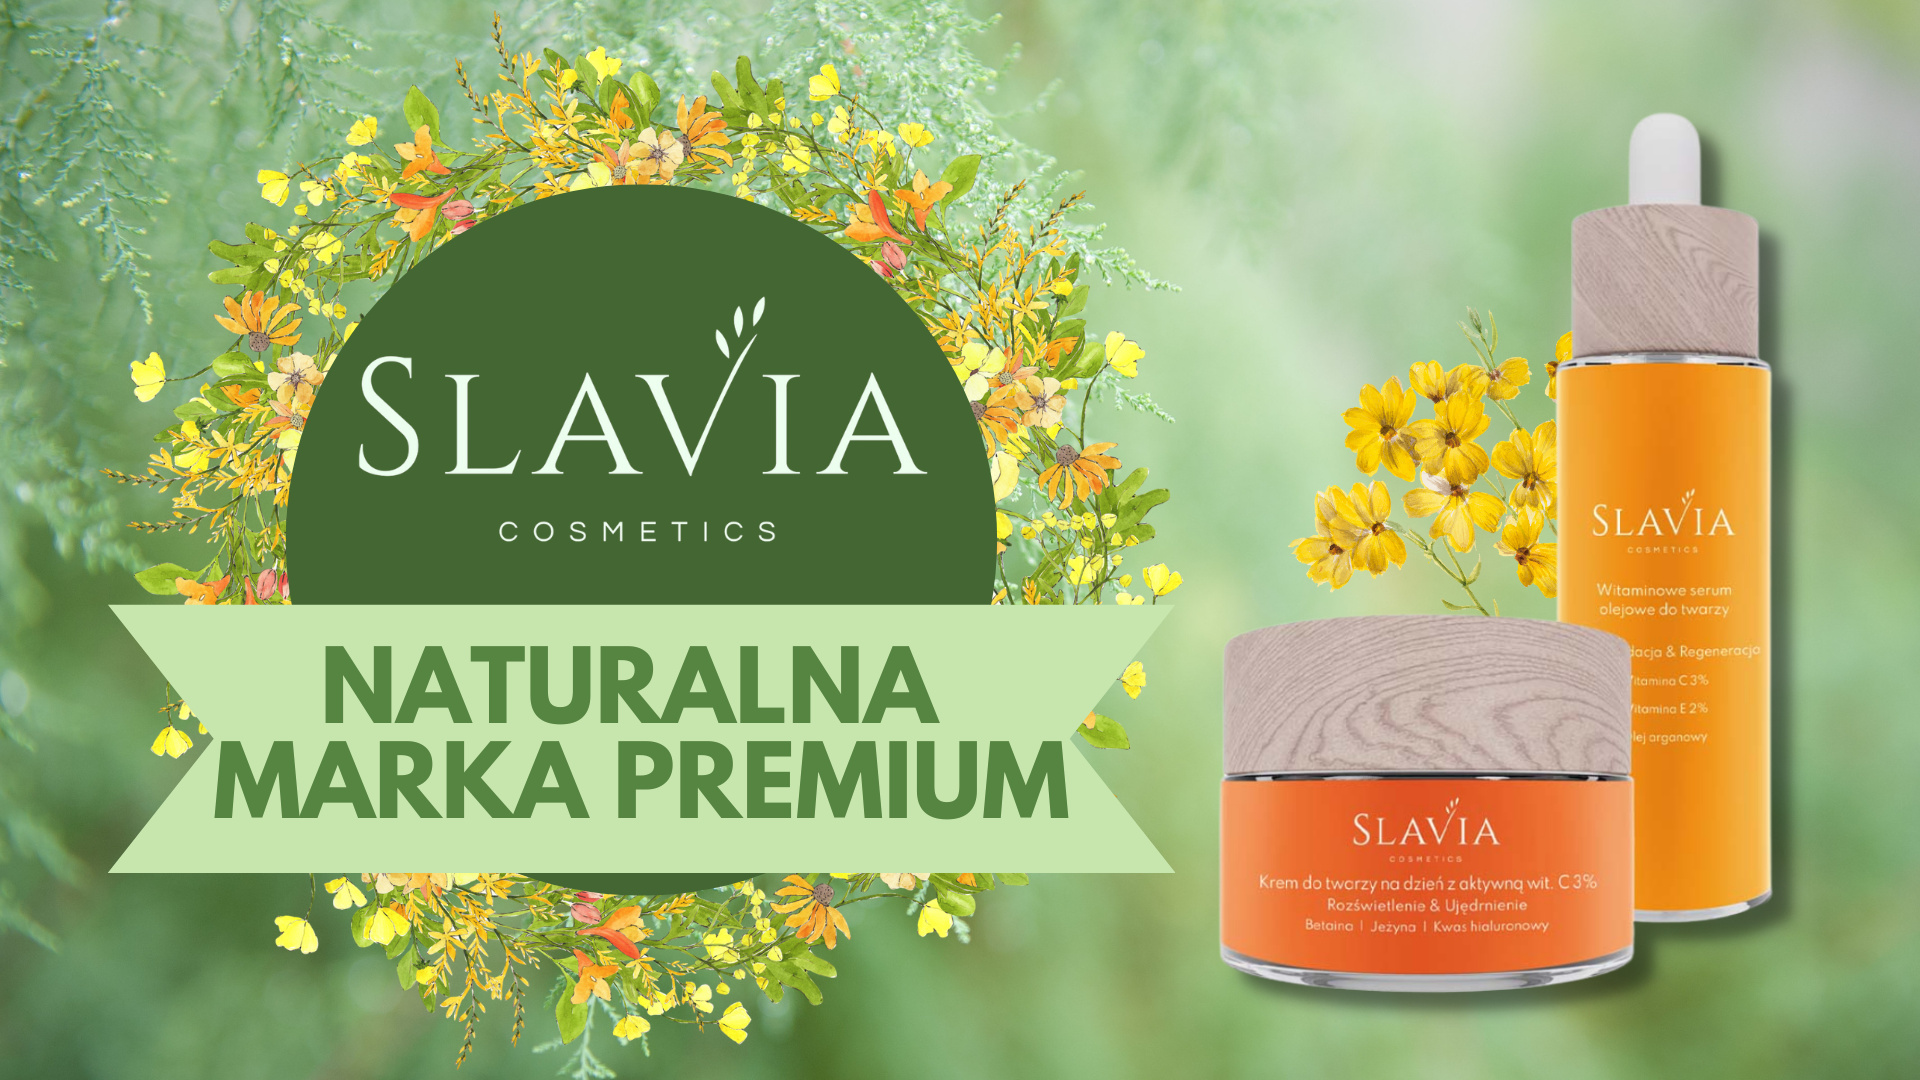 Slavia-naturalne-kosmetyki-premium-slavia-kosmetyki-opinie